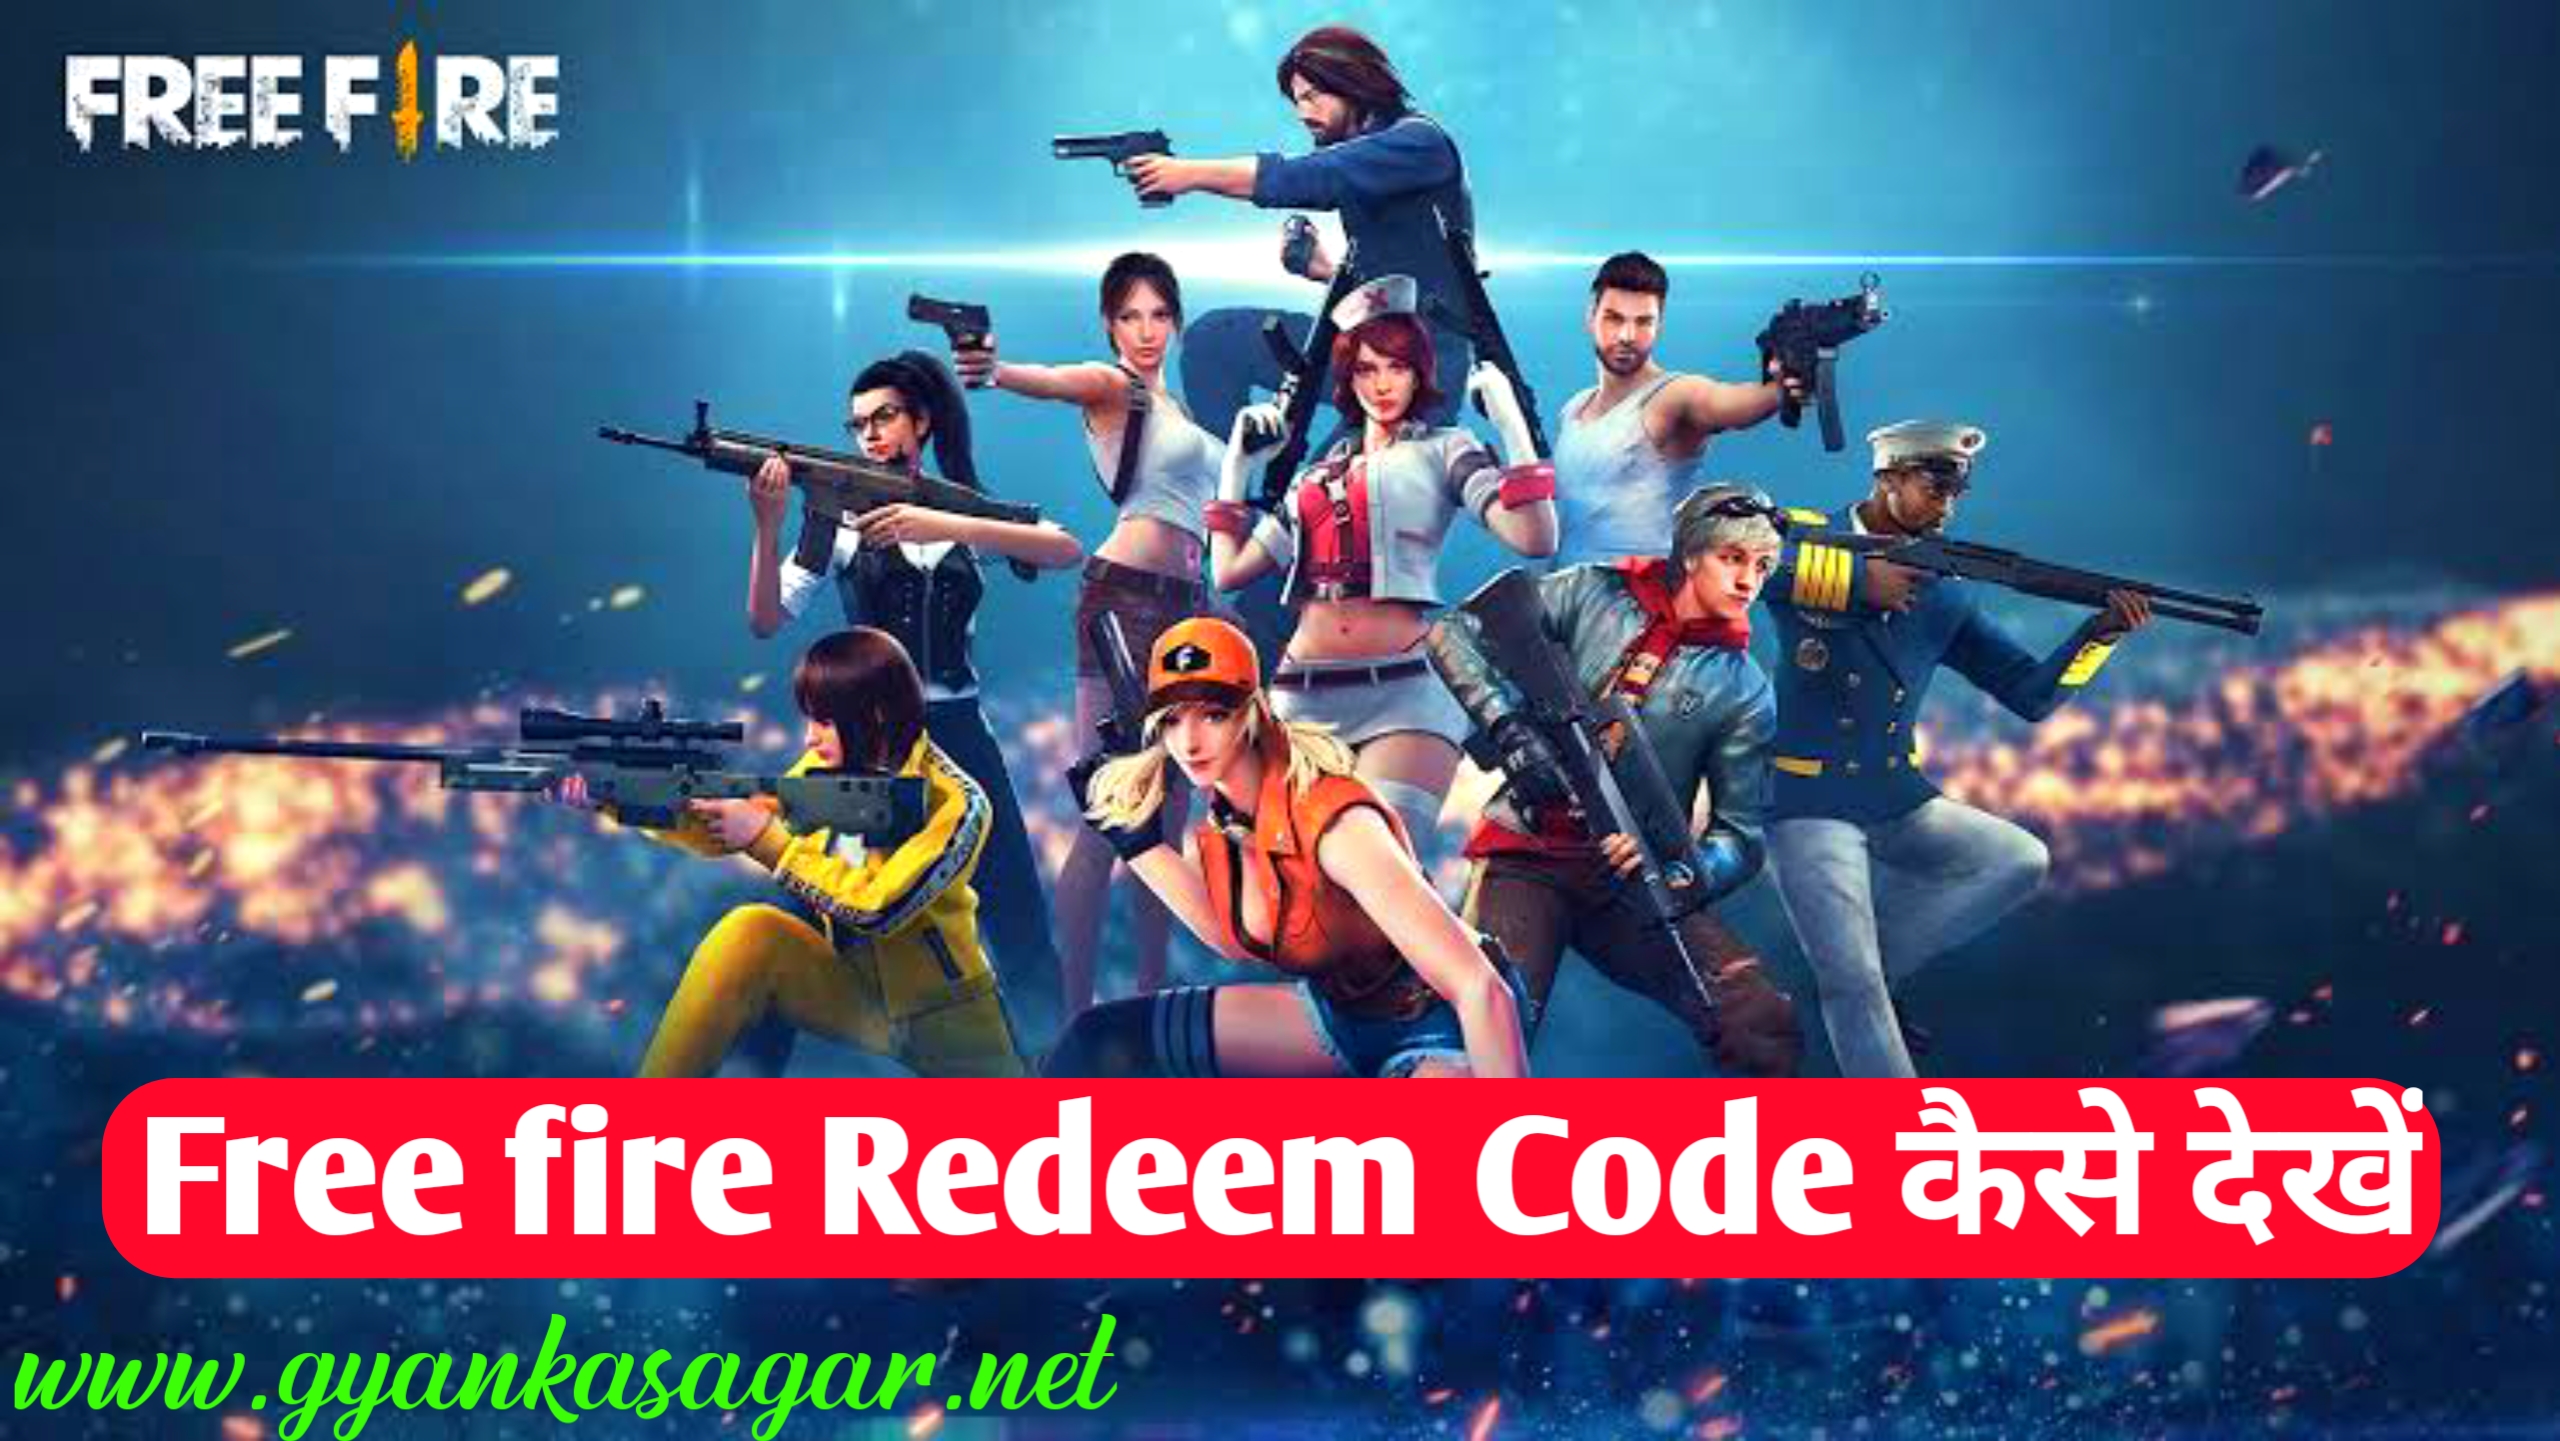 free fire redeem code 2022 |Free Fire में Free में Redeem Code कैसे ले?,फ्री फायर रिडीम कोड 2022 | Free Fire Redeem Code Today – फ्री में रिडीम कोड कैसे लें